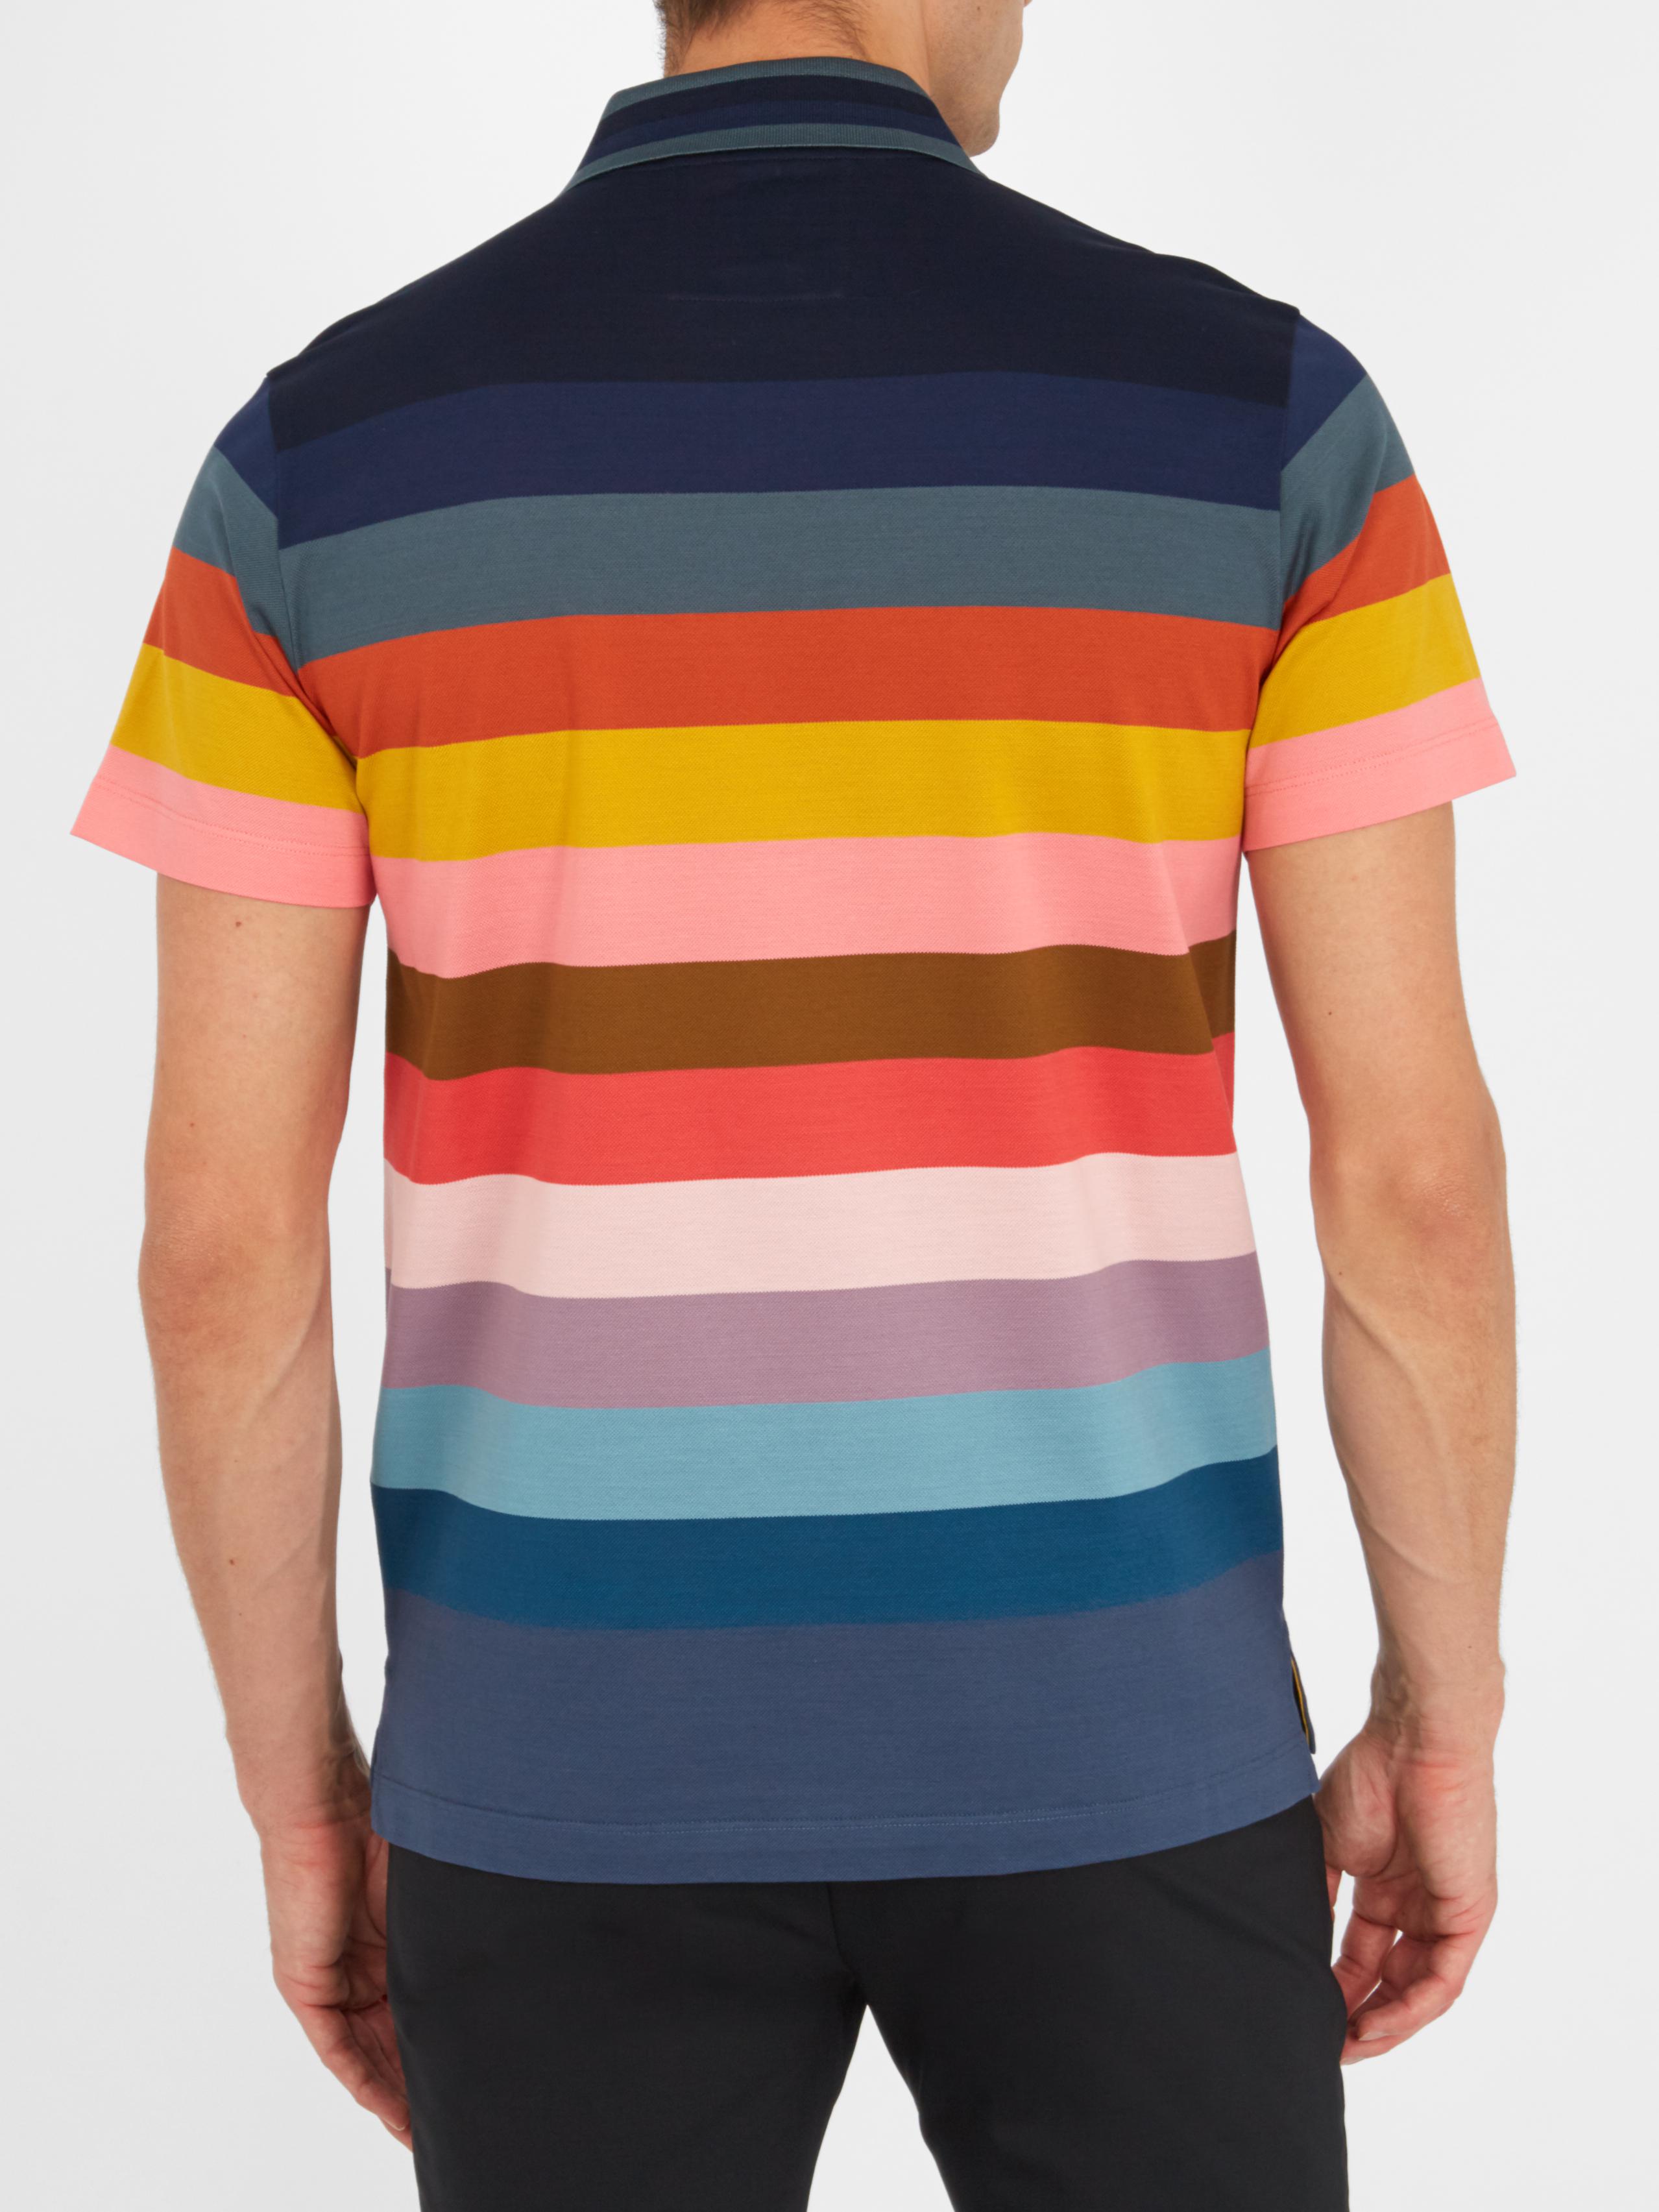 Paul Smith Rainbow Striped Cotton-piqué Polo Shirt for Men - Lyst